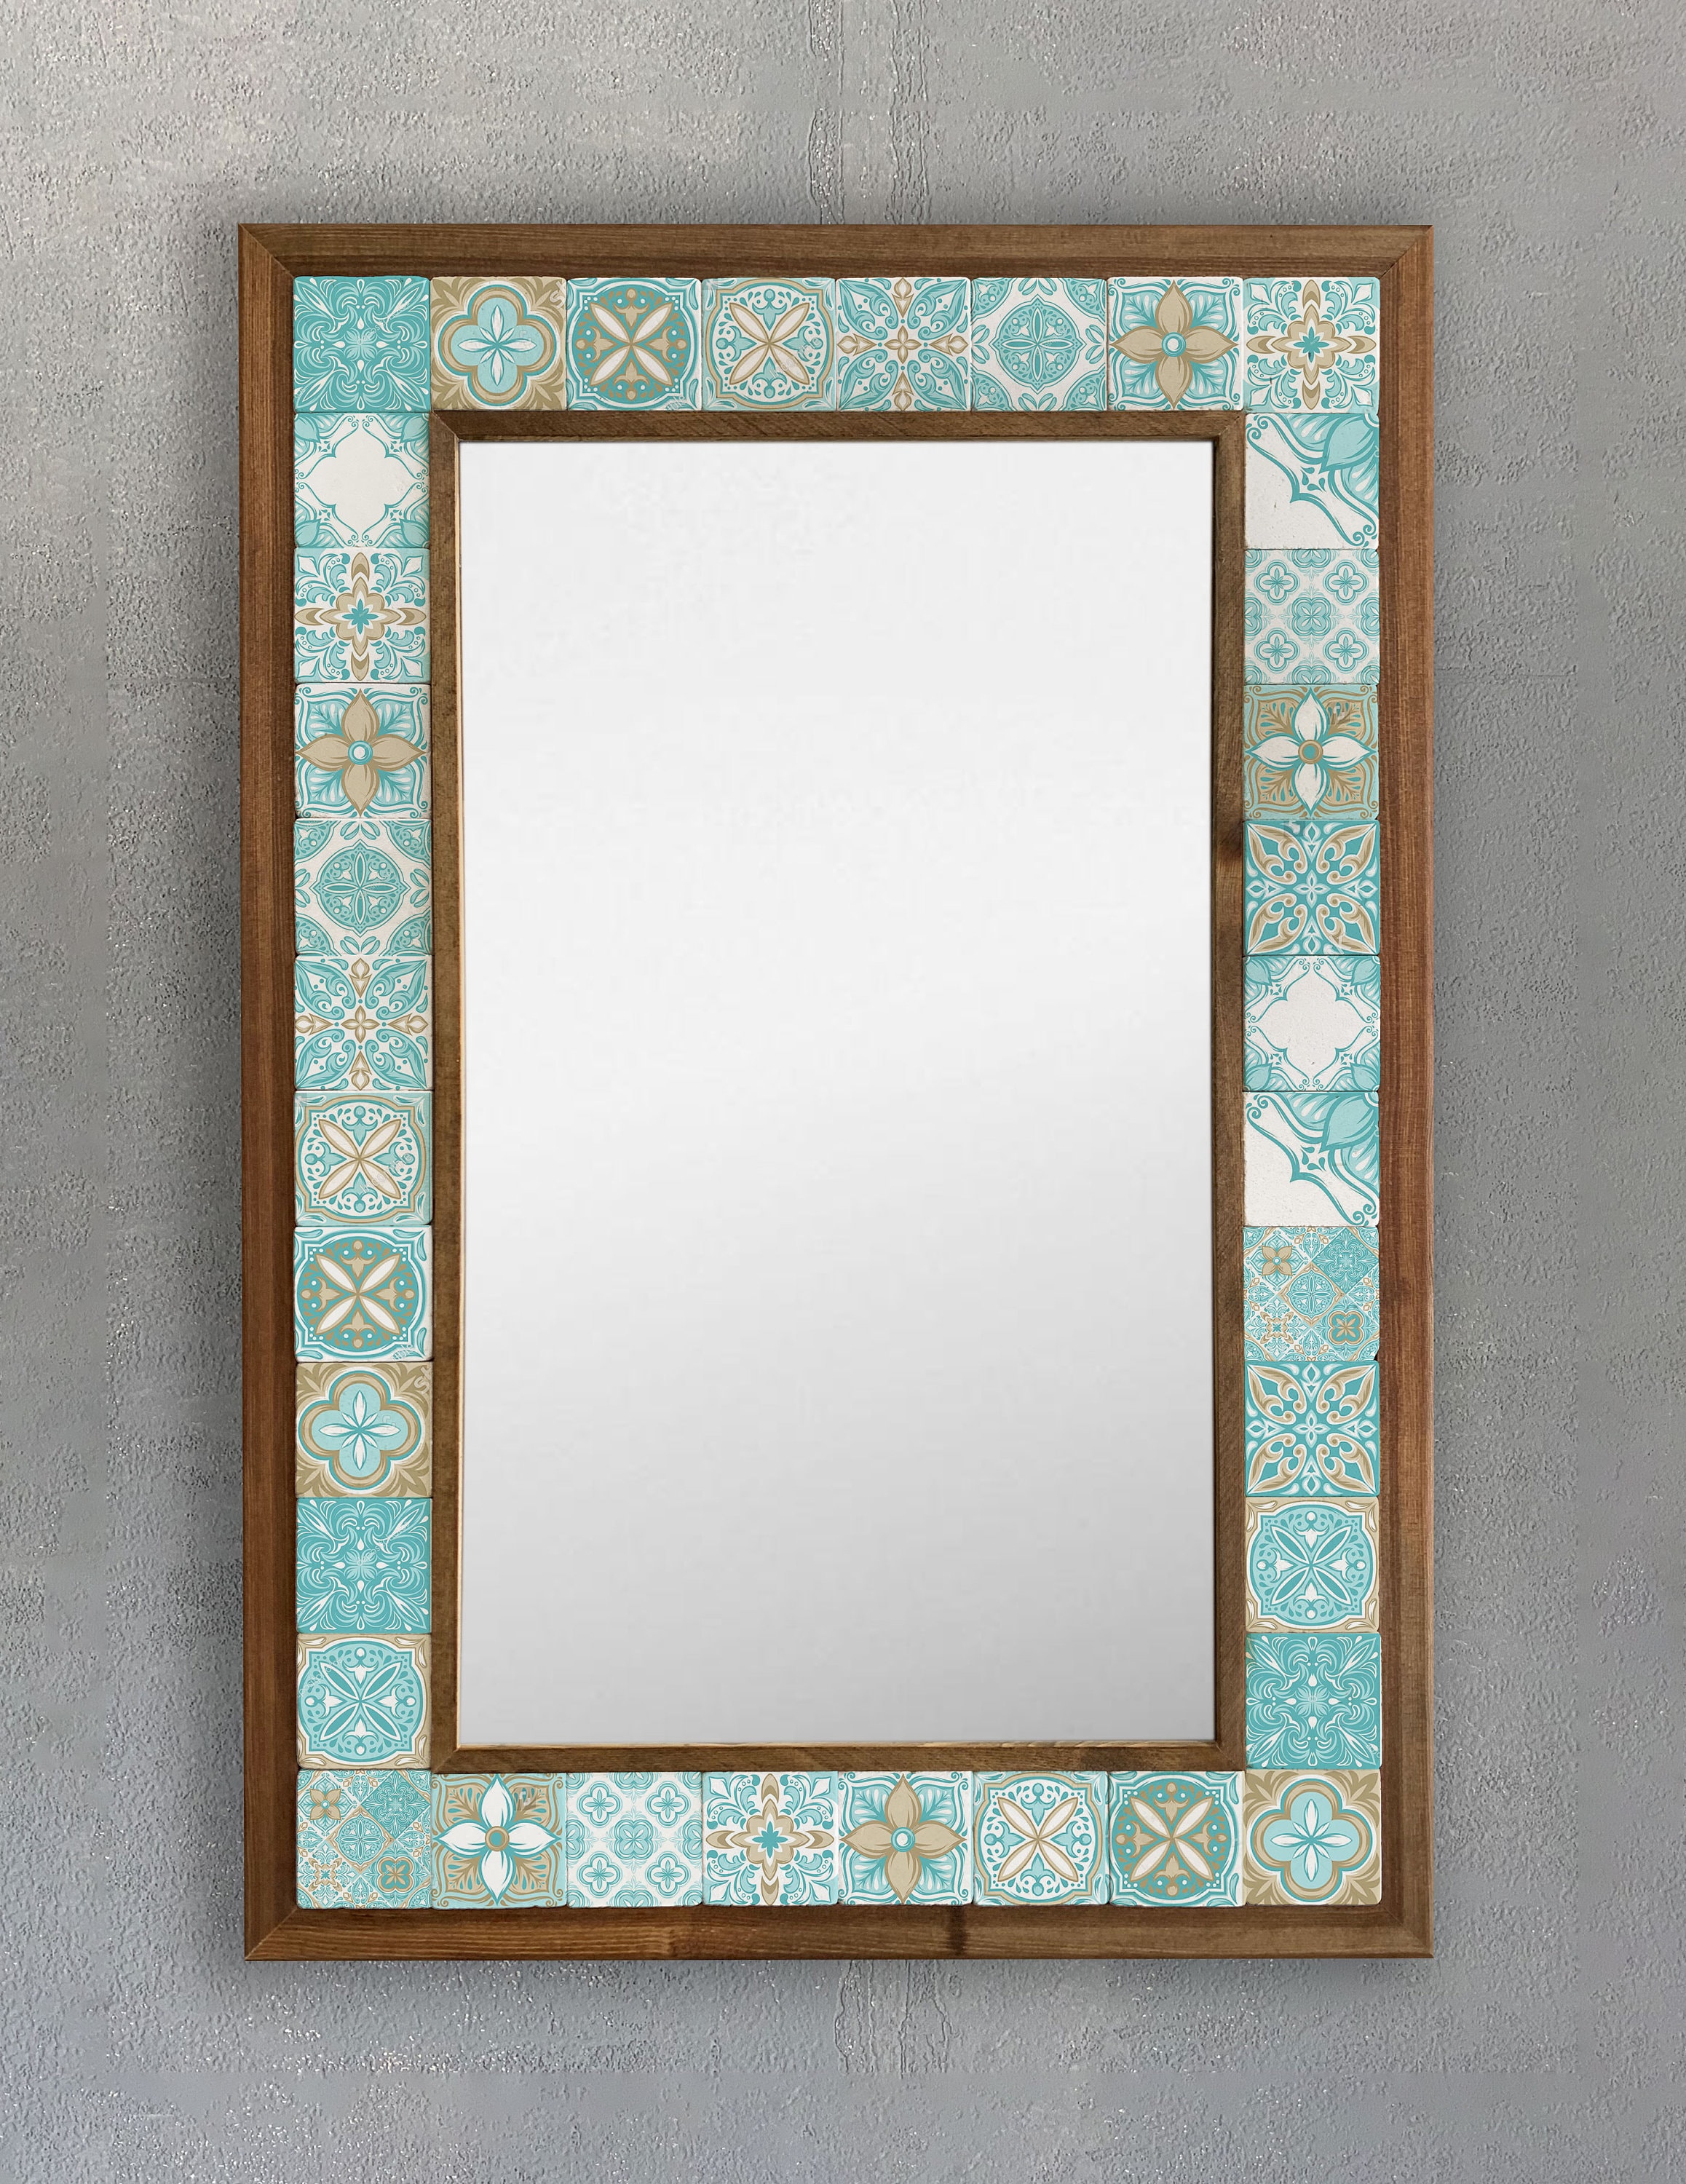 Mosaic Mirror Tiles Self Adhesive Silver Gold Rose Mirror Tiles for DIY  Disco Balls, Crafts, Home and Locker Decor 2 